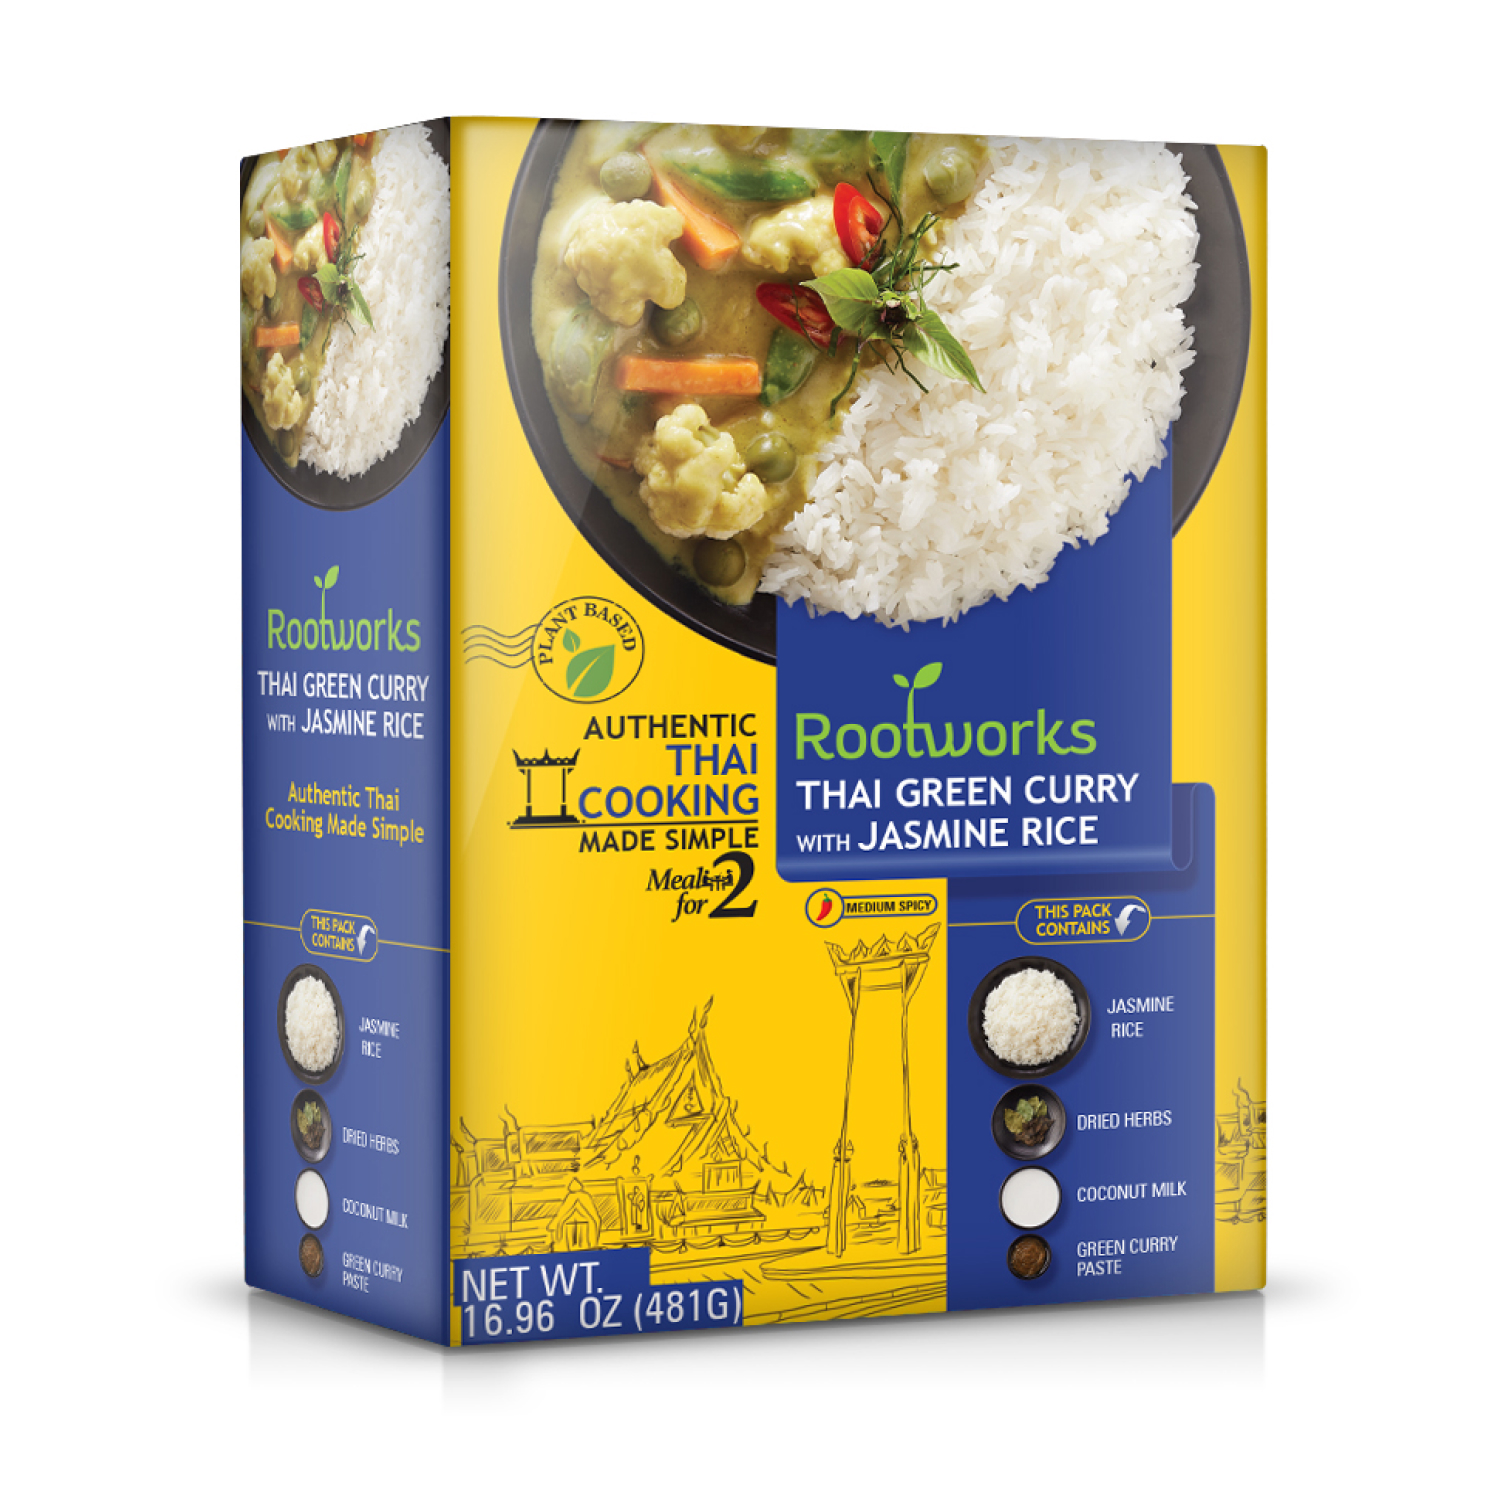 Thai Green Curry with Jasmine Rice